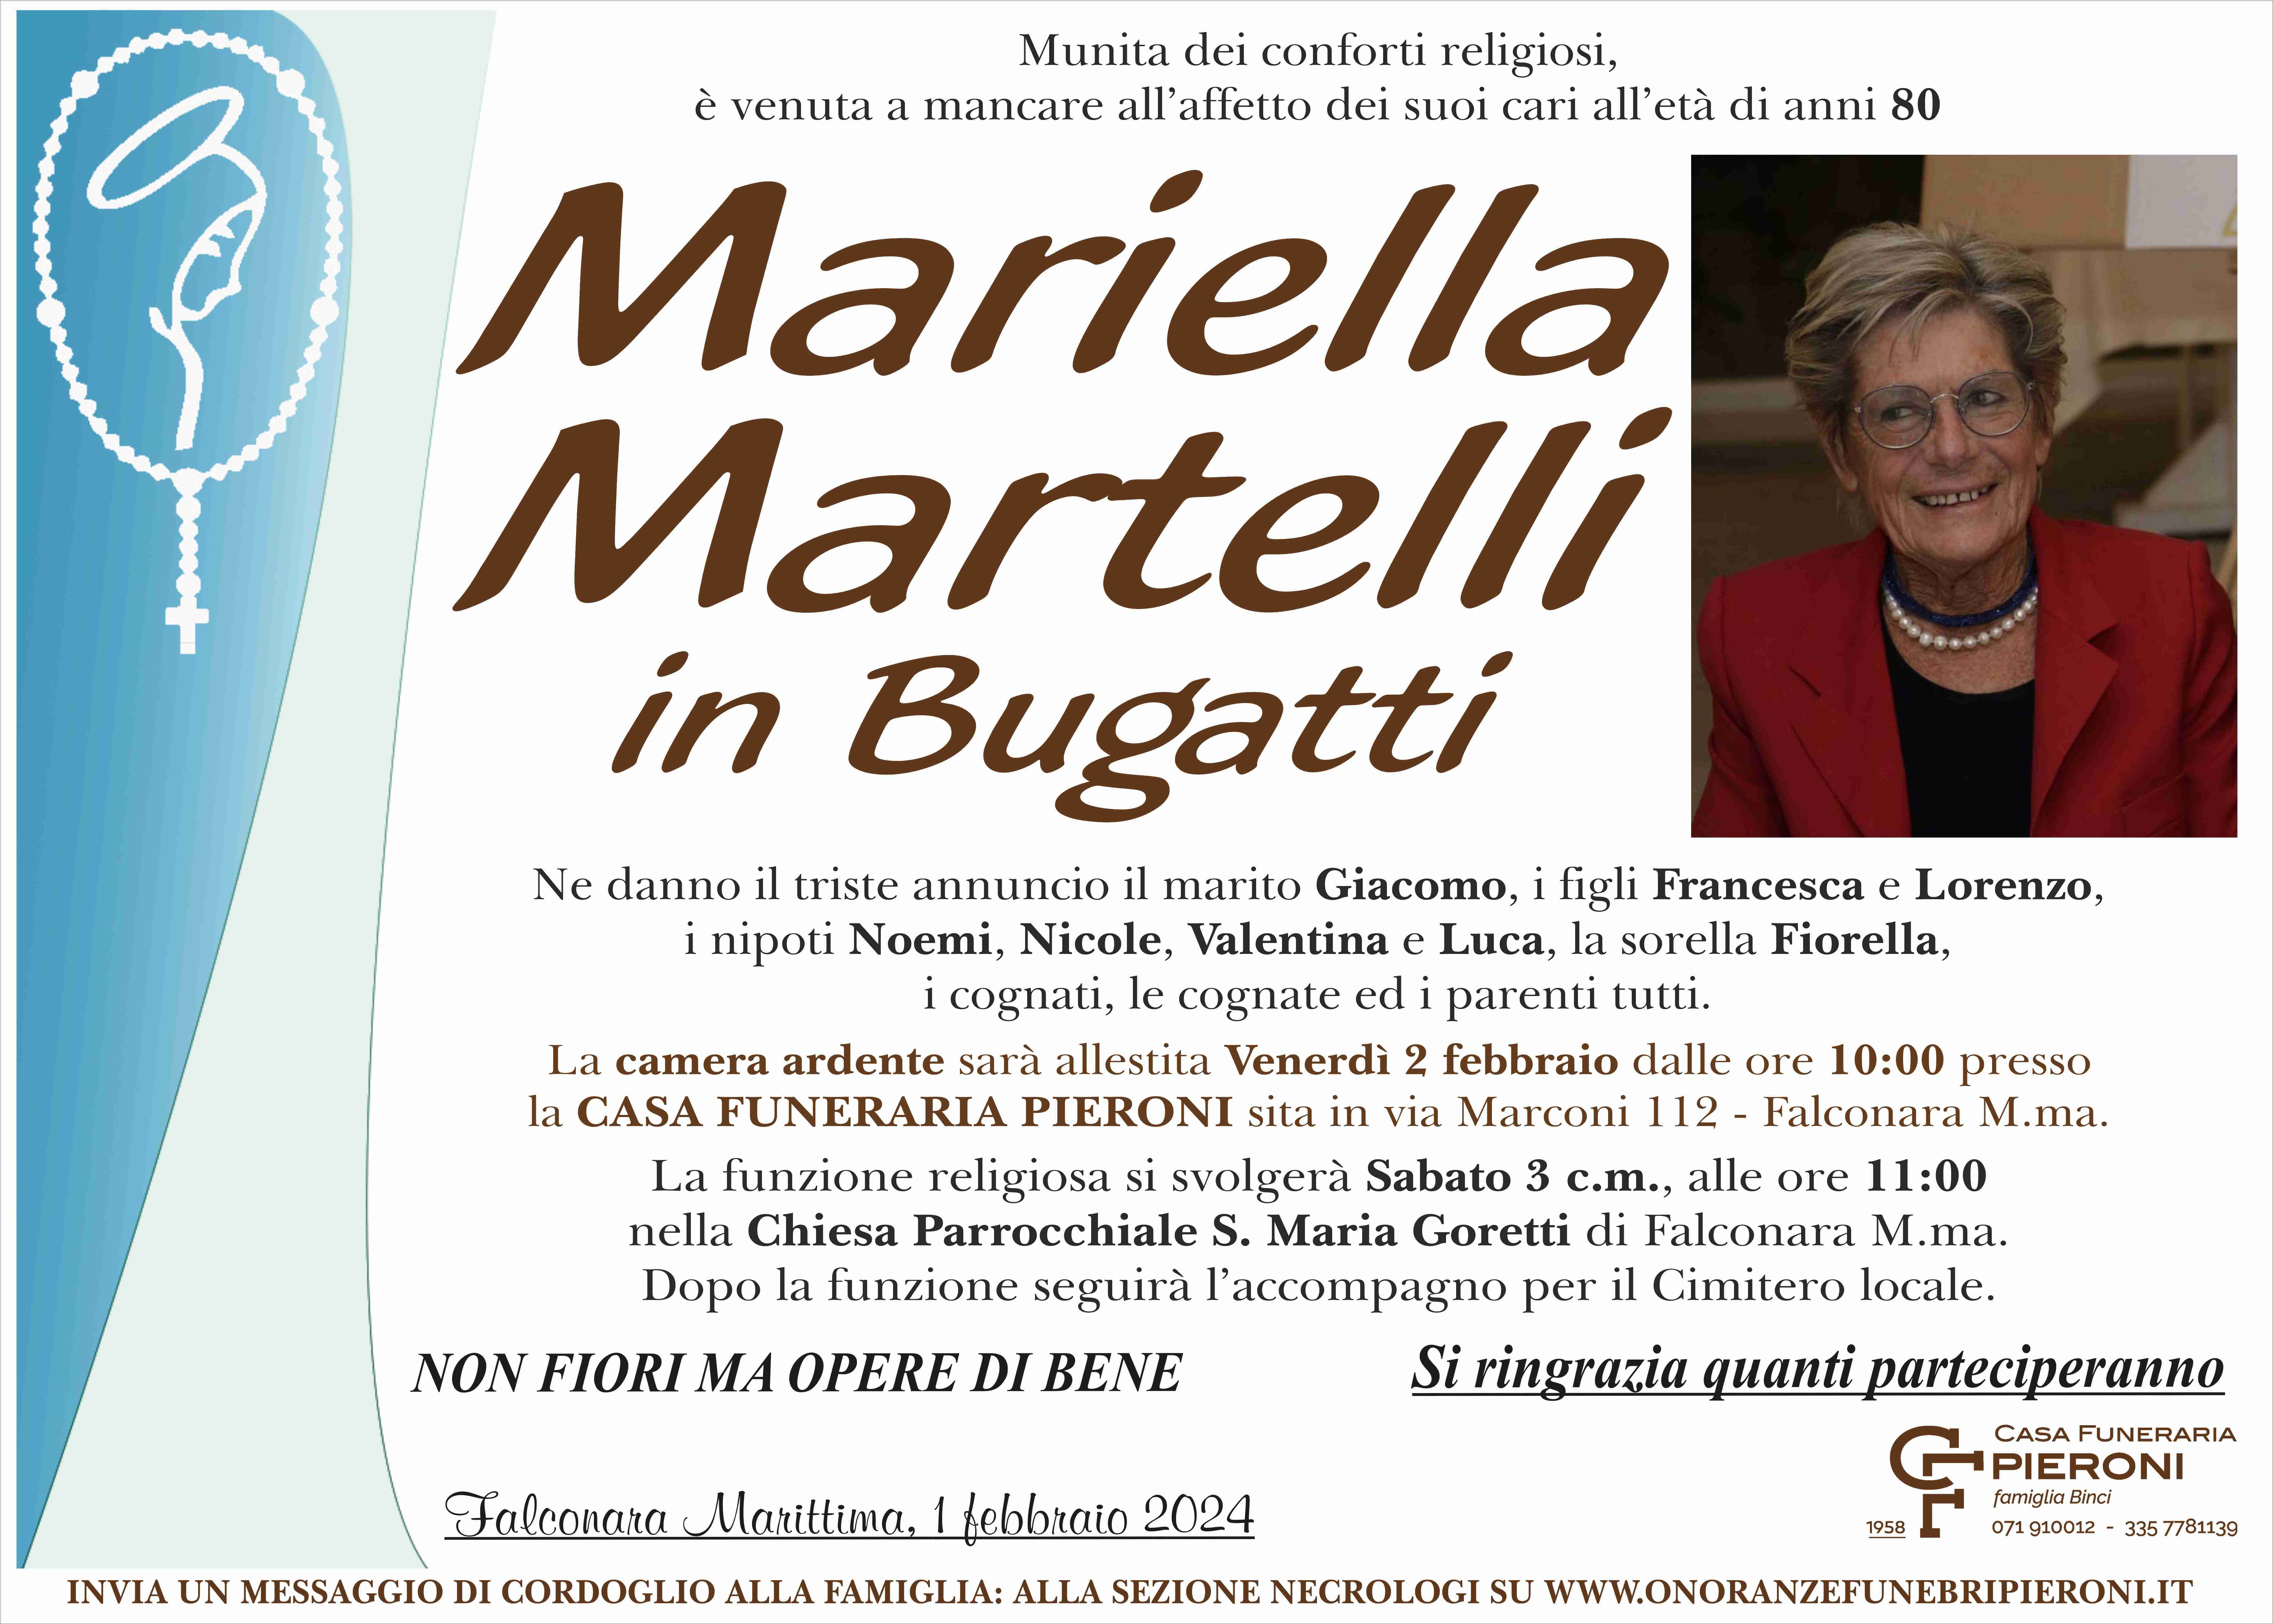 Mariella Martelli